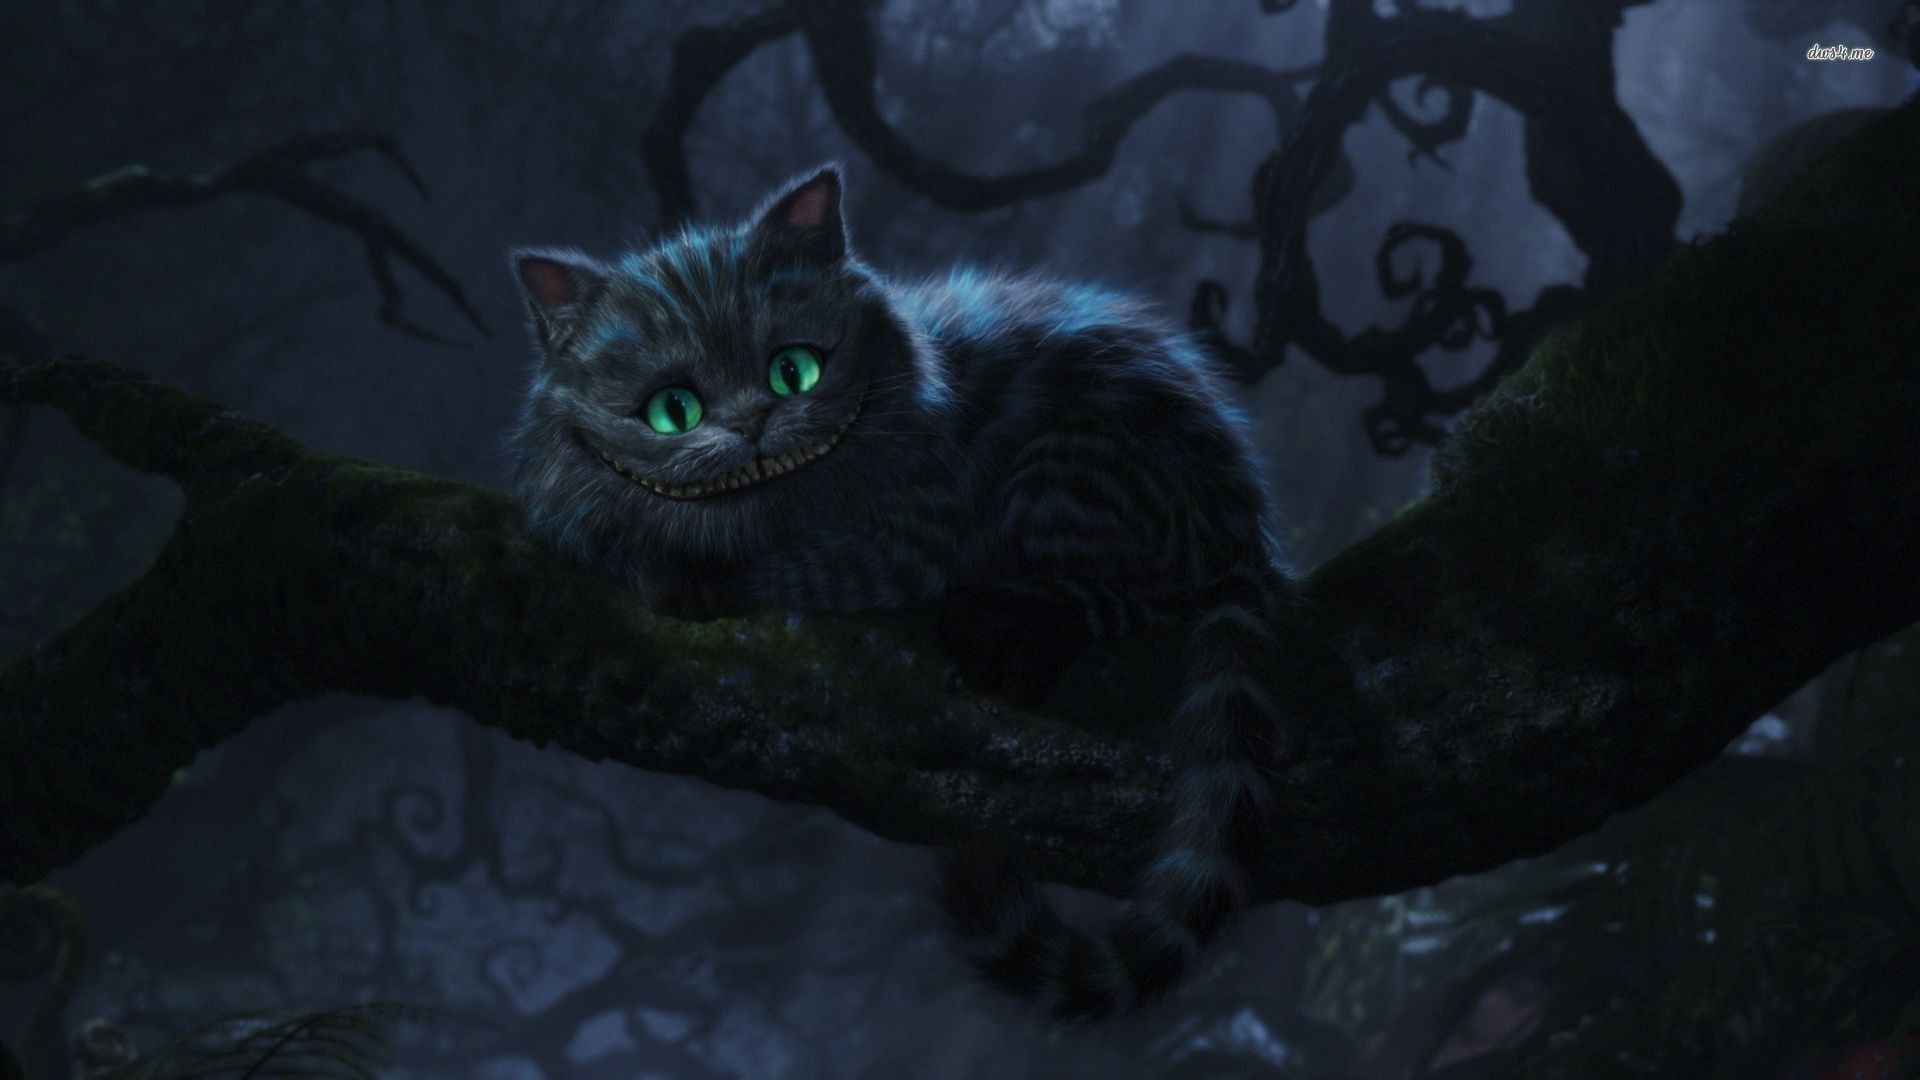 cheshire cat wallpaper we're all mad here in wonderland cartoon, Cheshire cat alice in wonderland, Cheshire cat tim burton